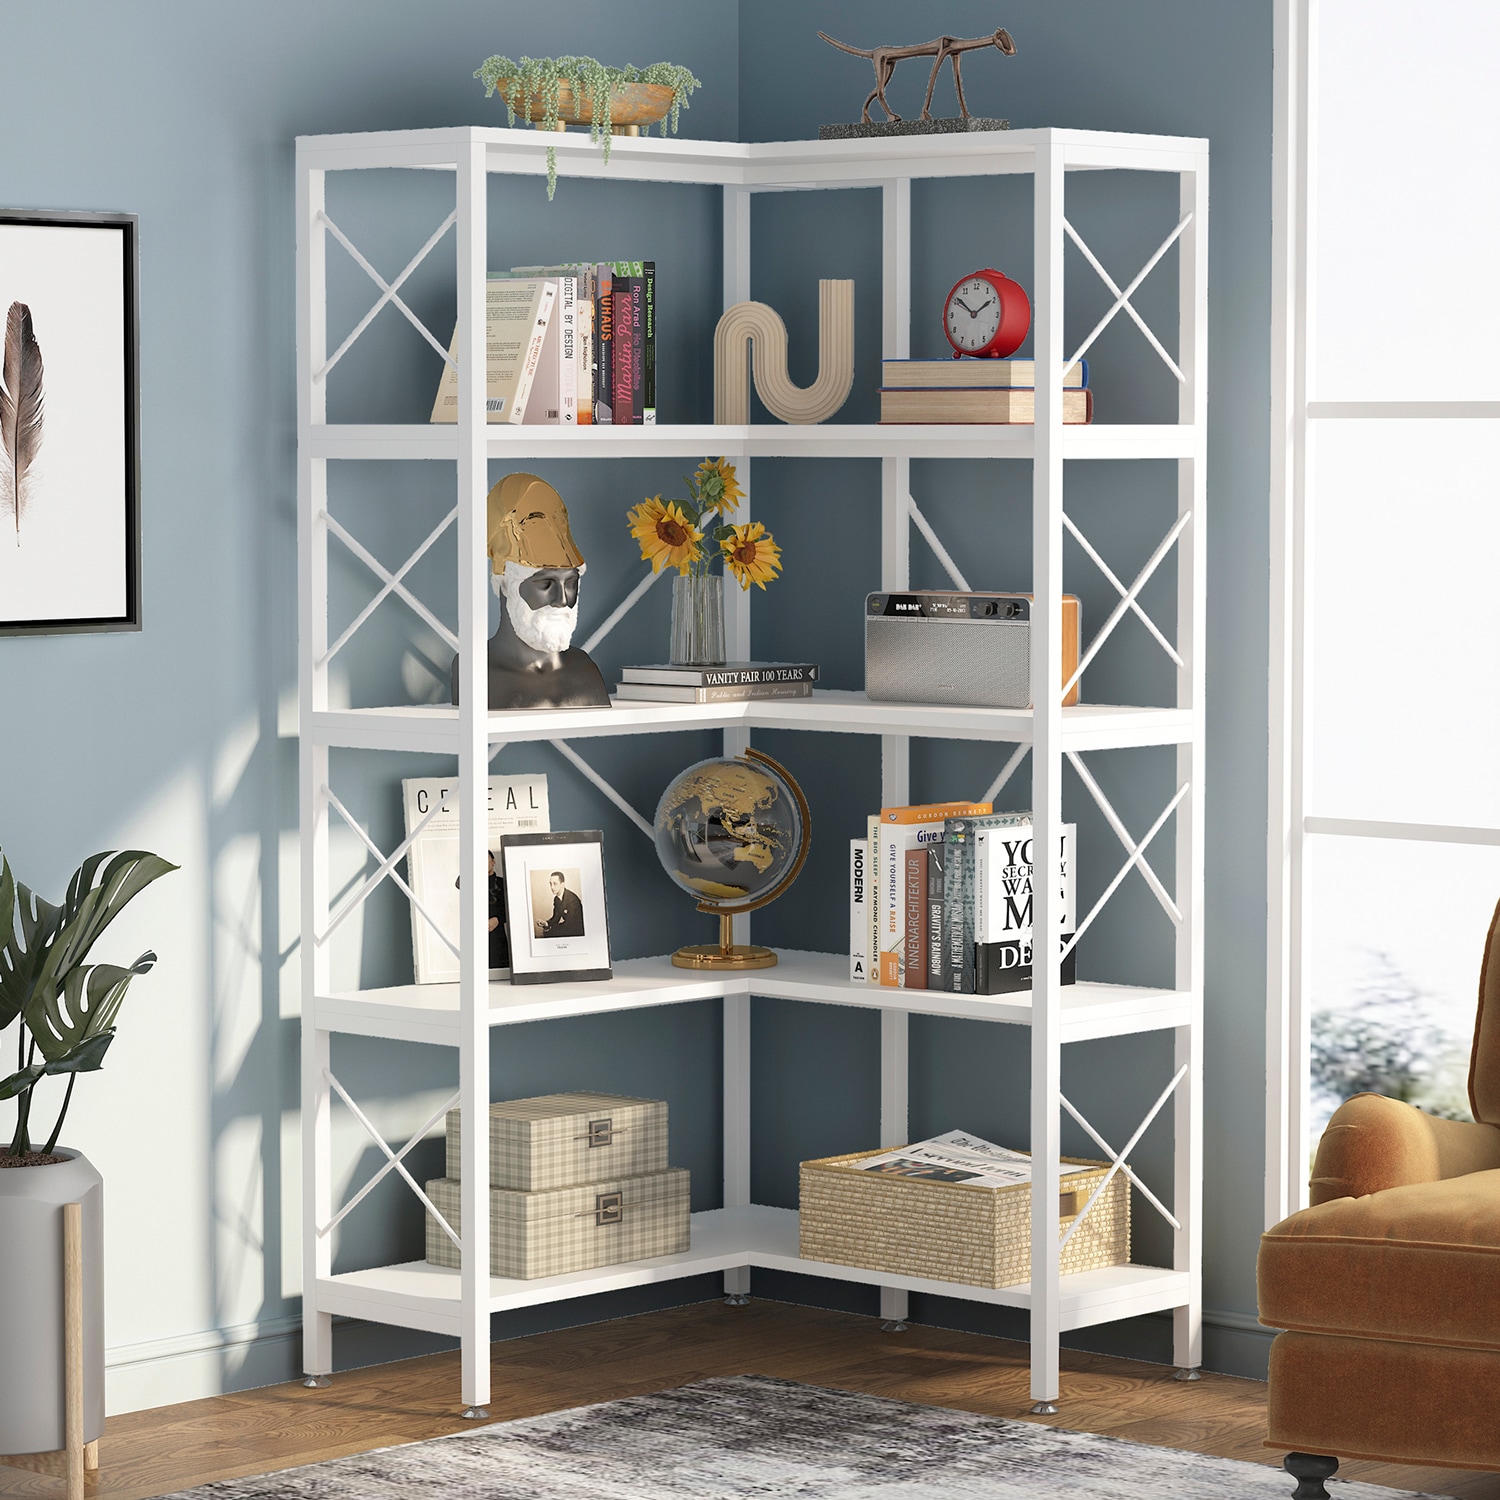 Tribesigns Industrial 5 Tier Corner Shelf/Bookshelf /Bookcase/Plant Stand - White